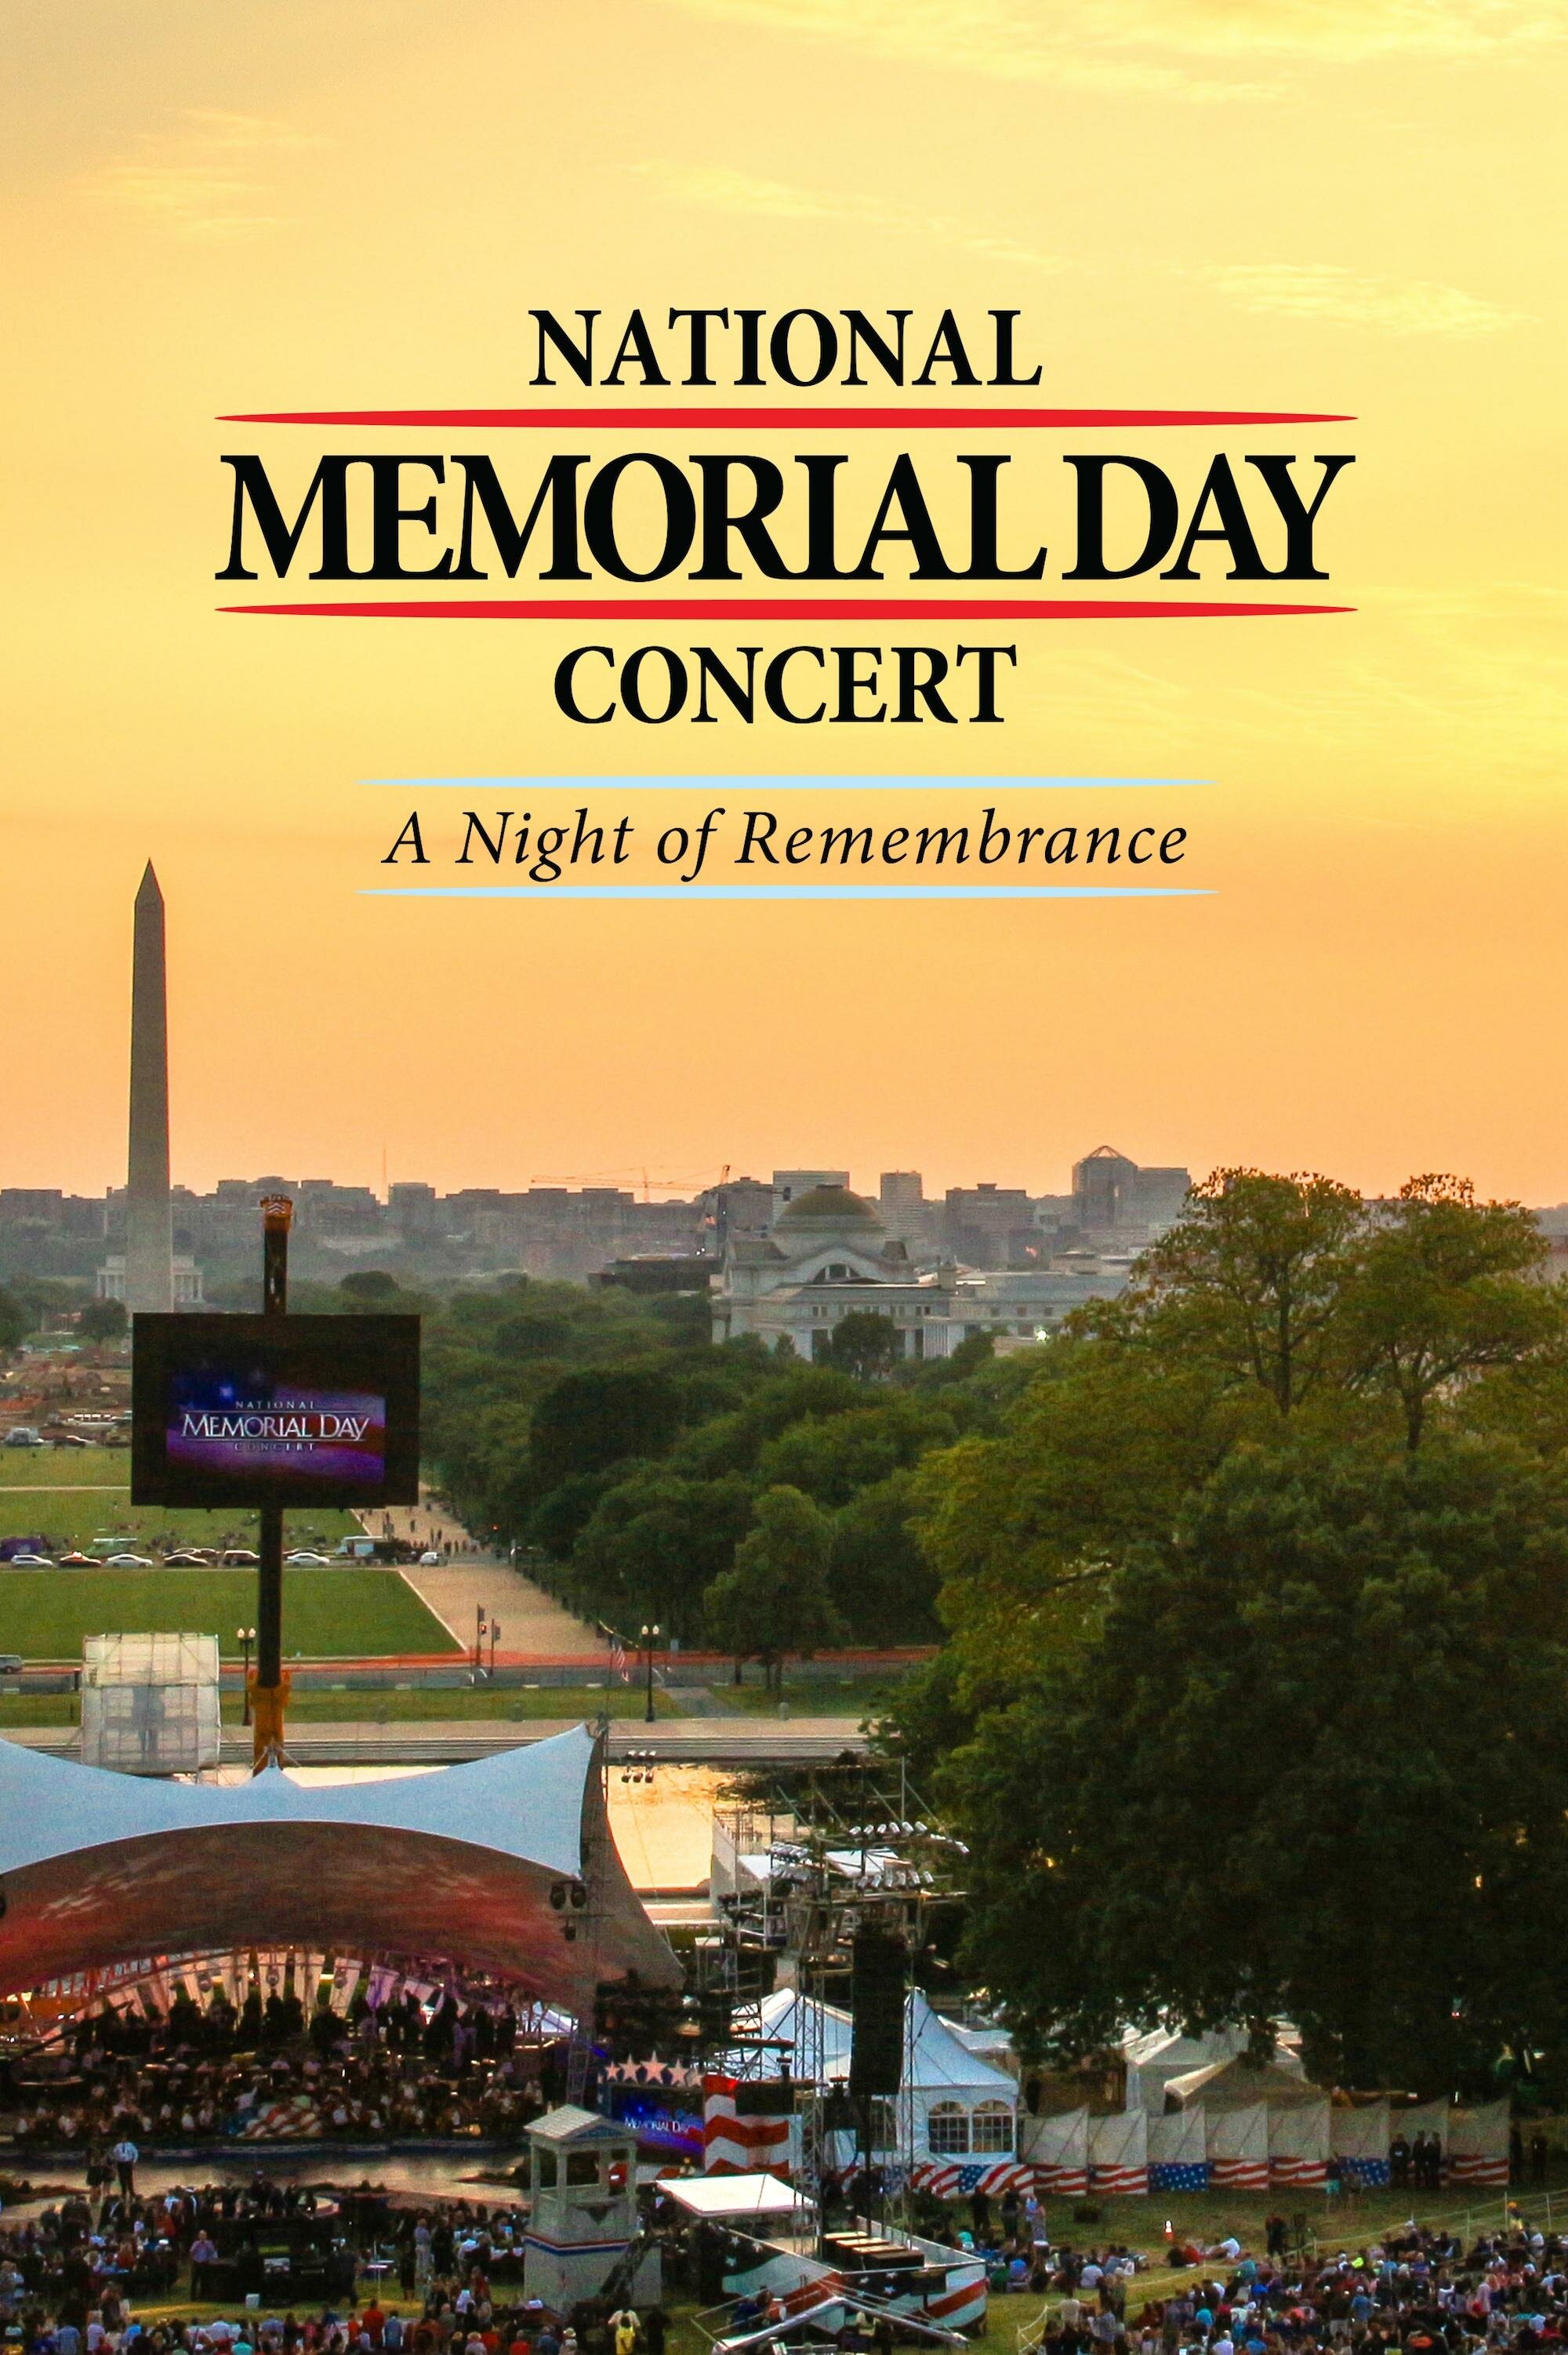 National Memorial Day Concert ne zaman